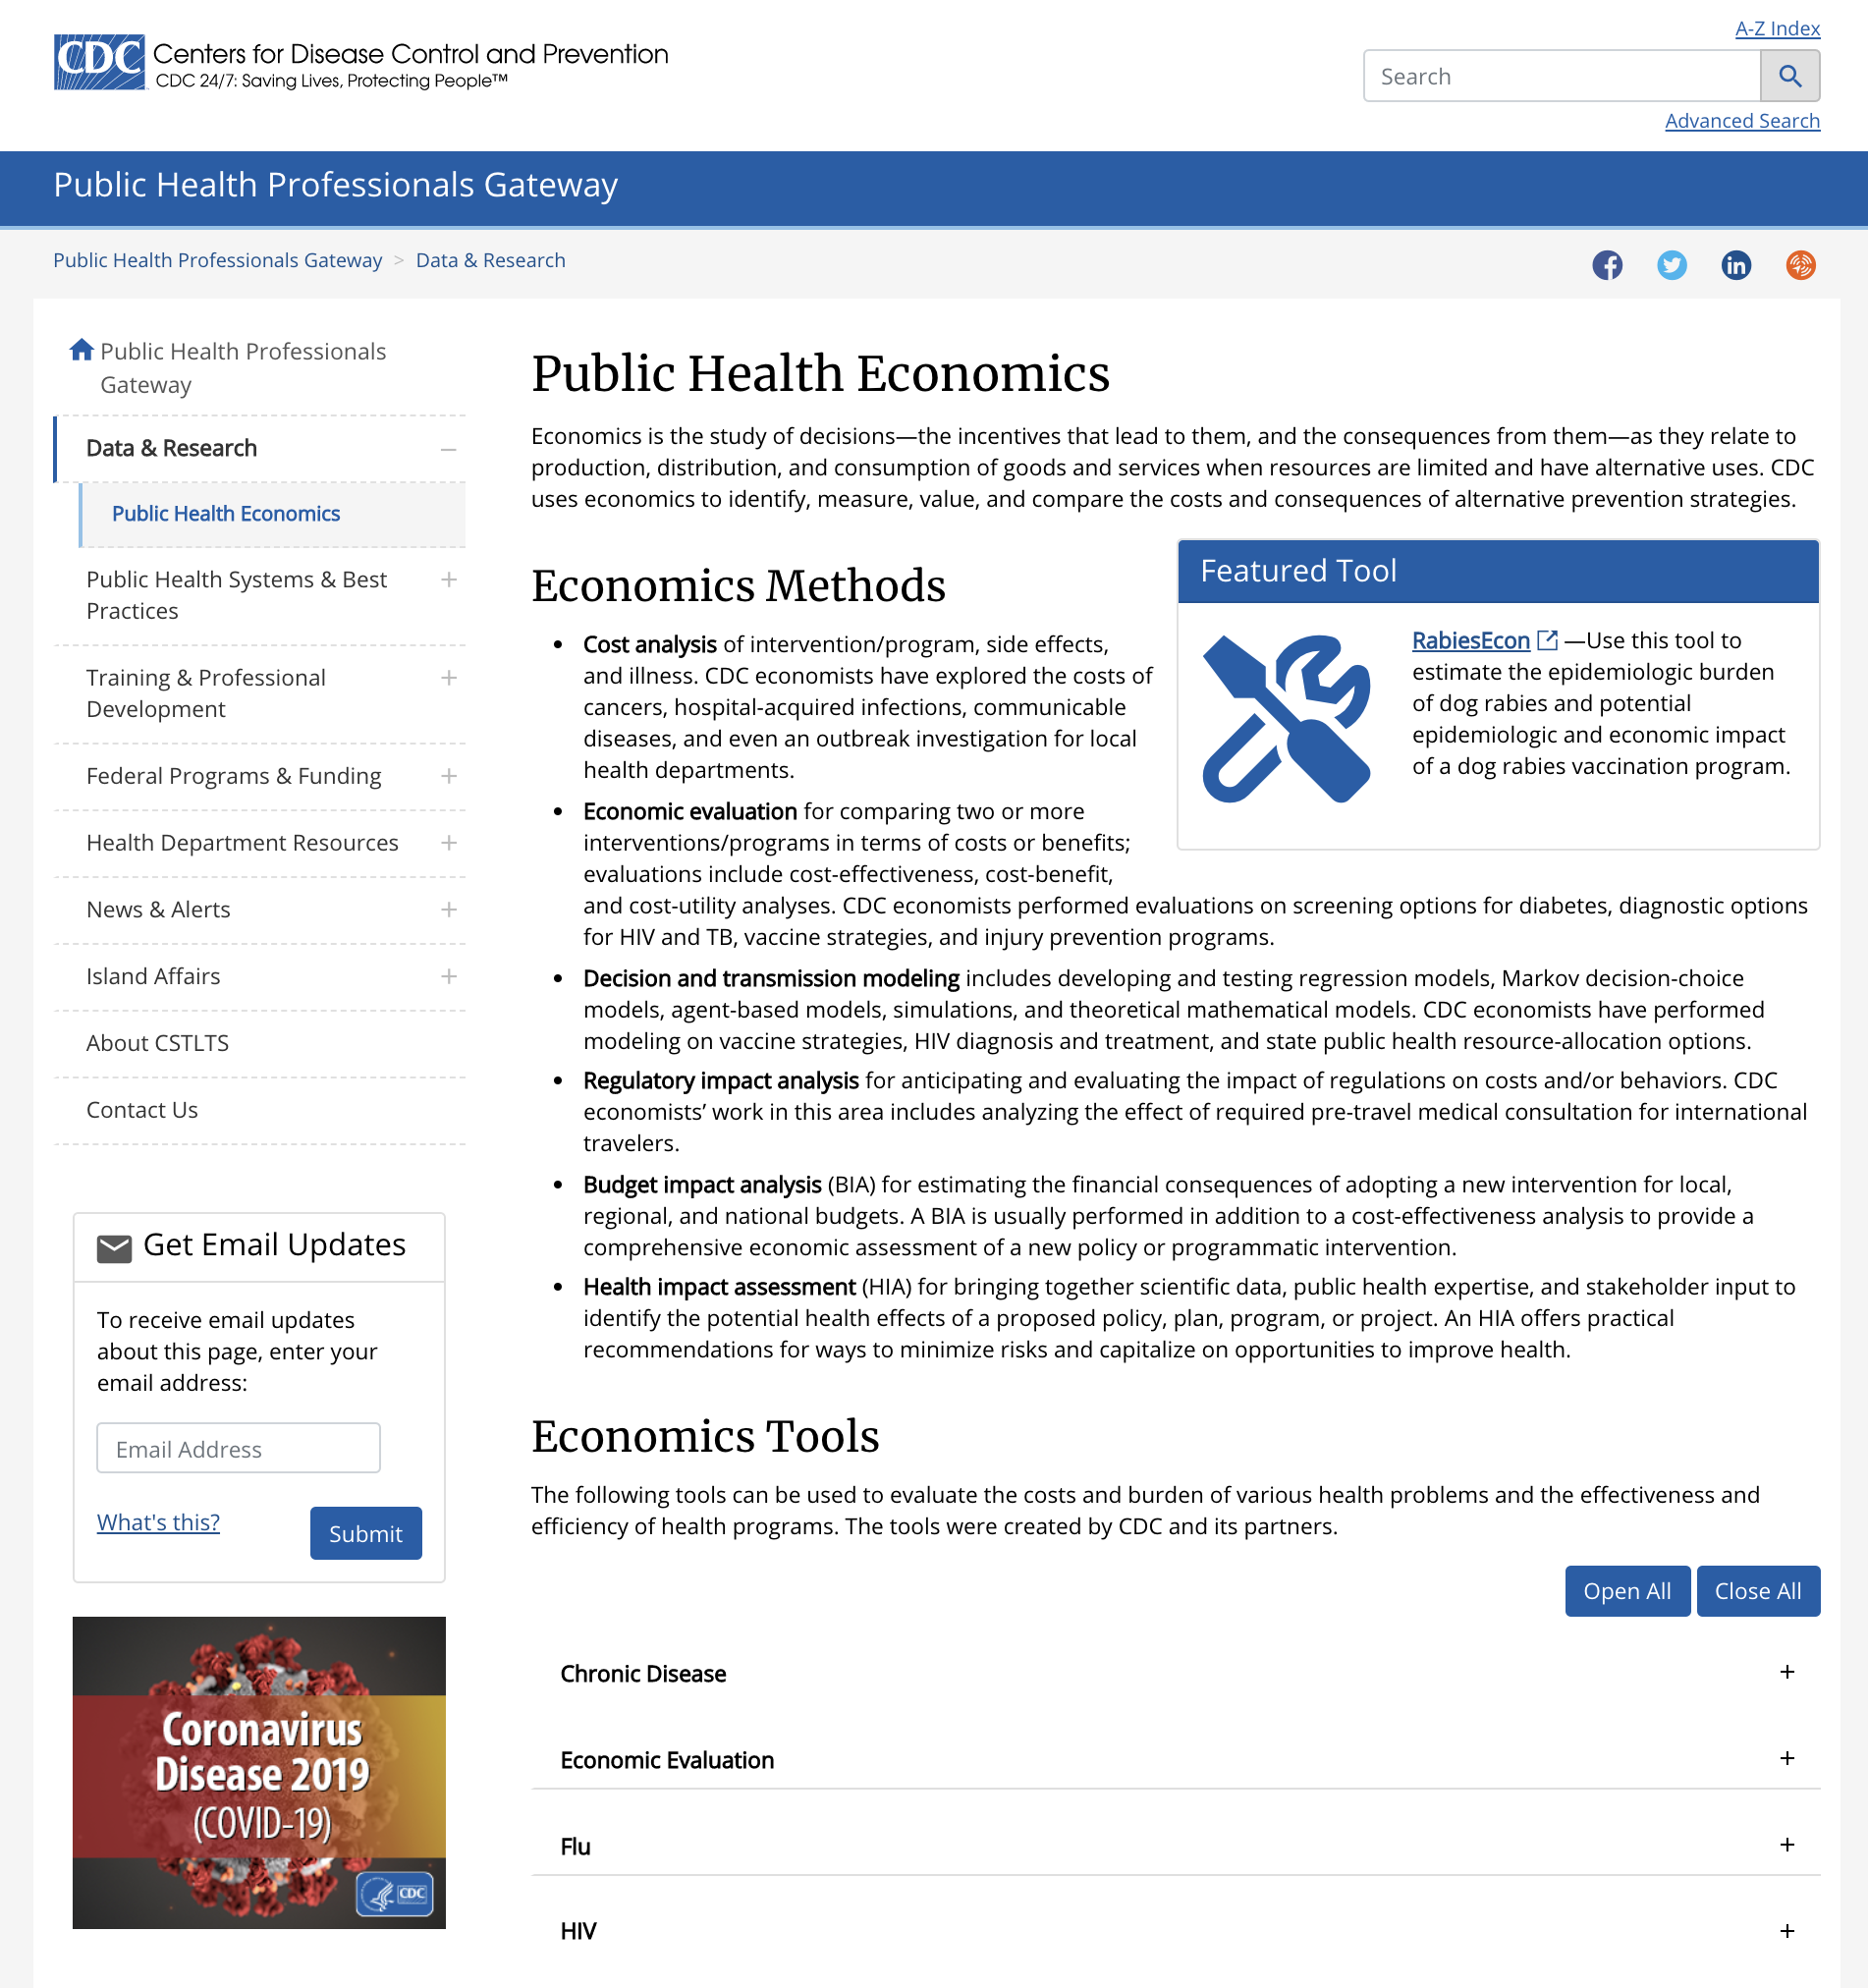 Public Health Economics Methods and Tools